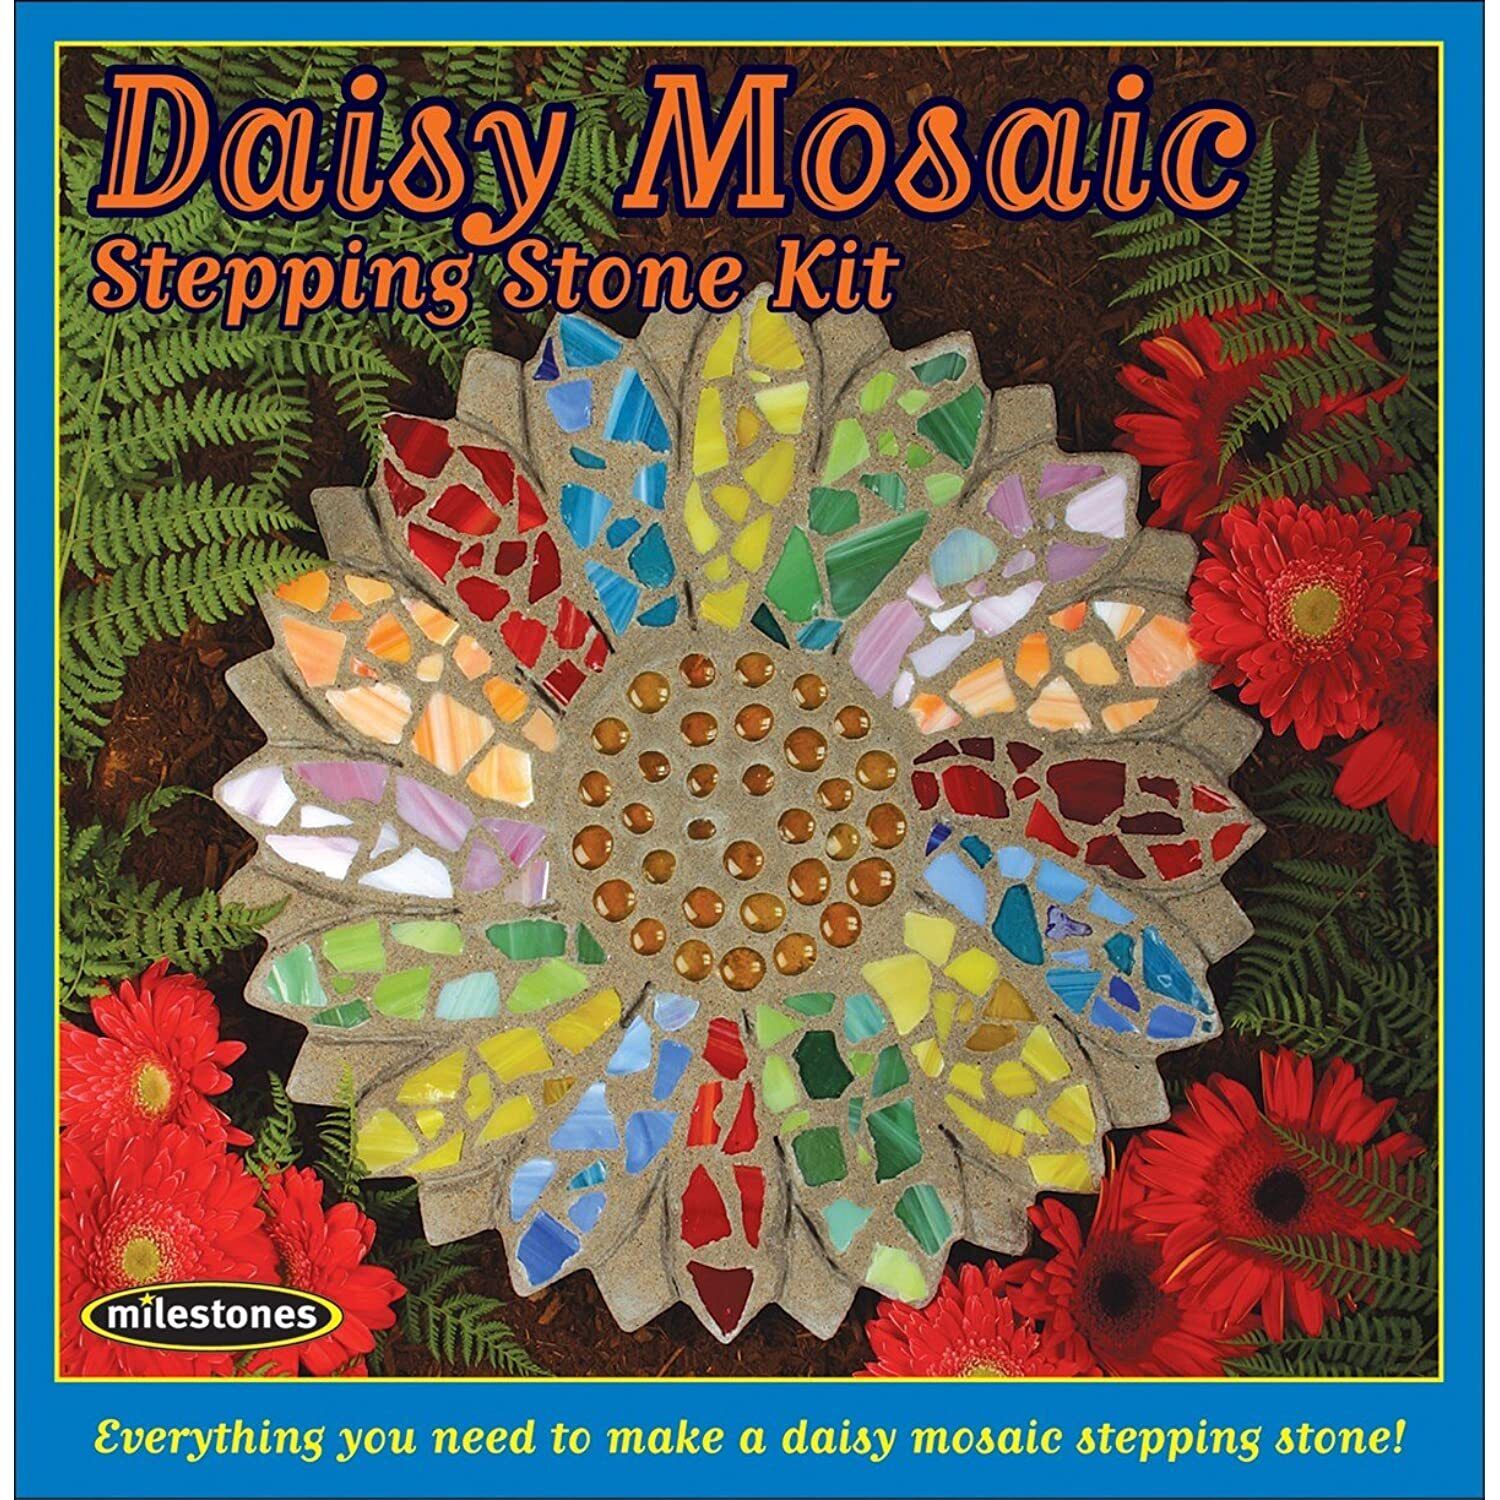 Co. Mosaic Stepping Stone Kit, Daisy